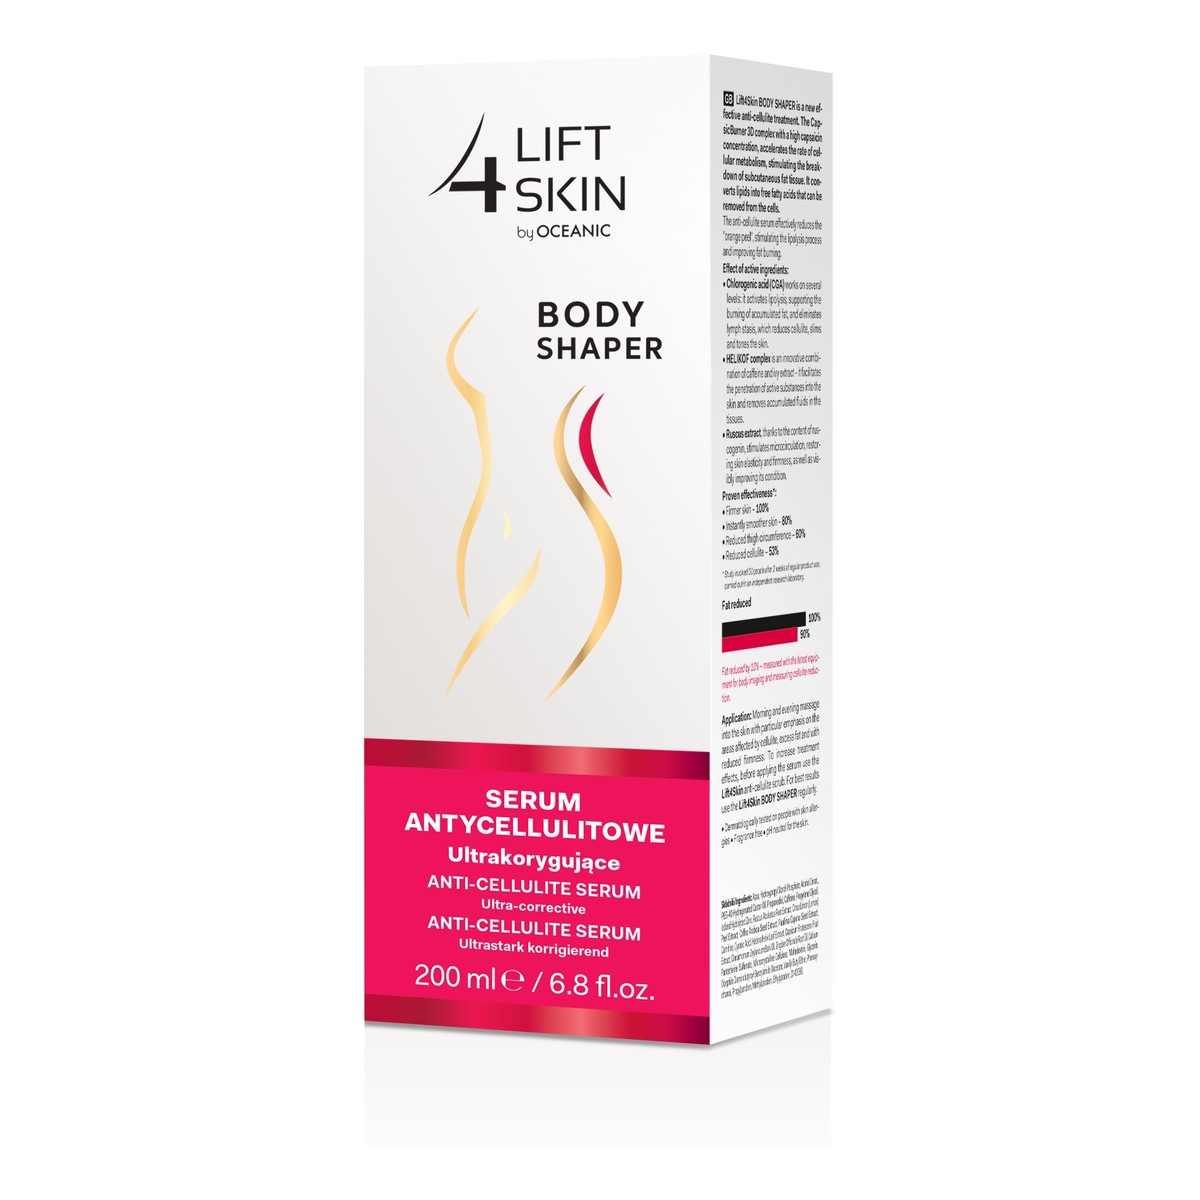 Lift 4 Skin ultrakorygujące serum antycelluitowe 200ml